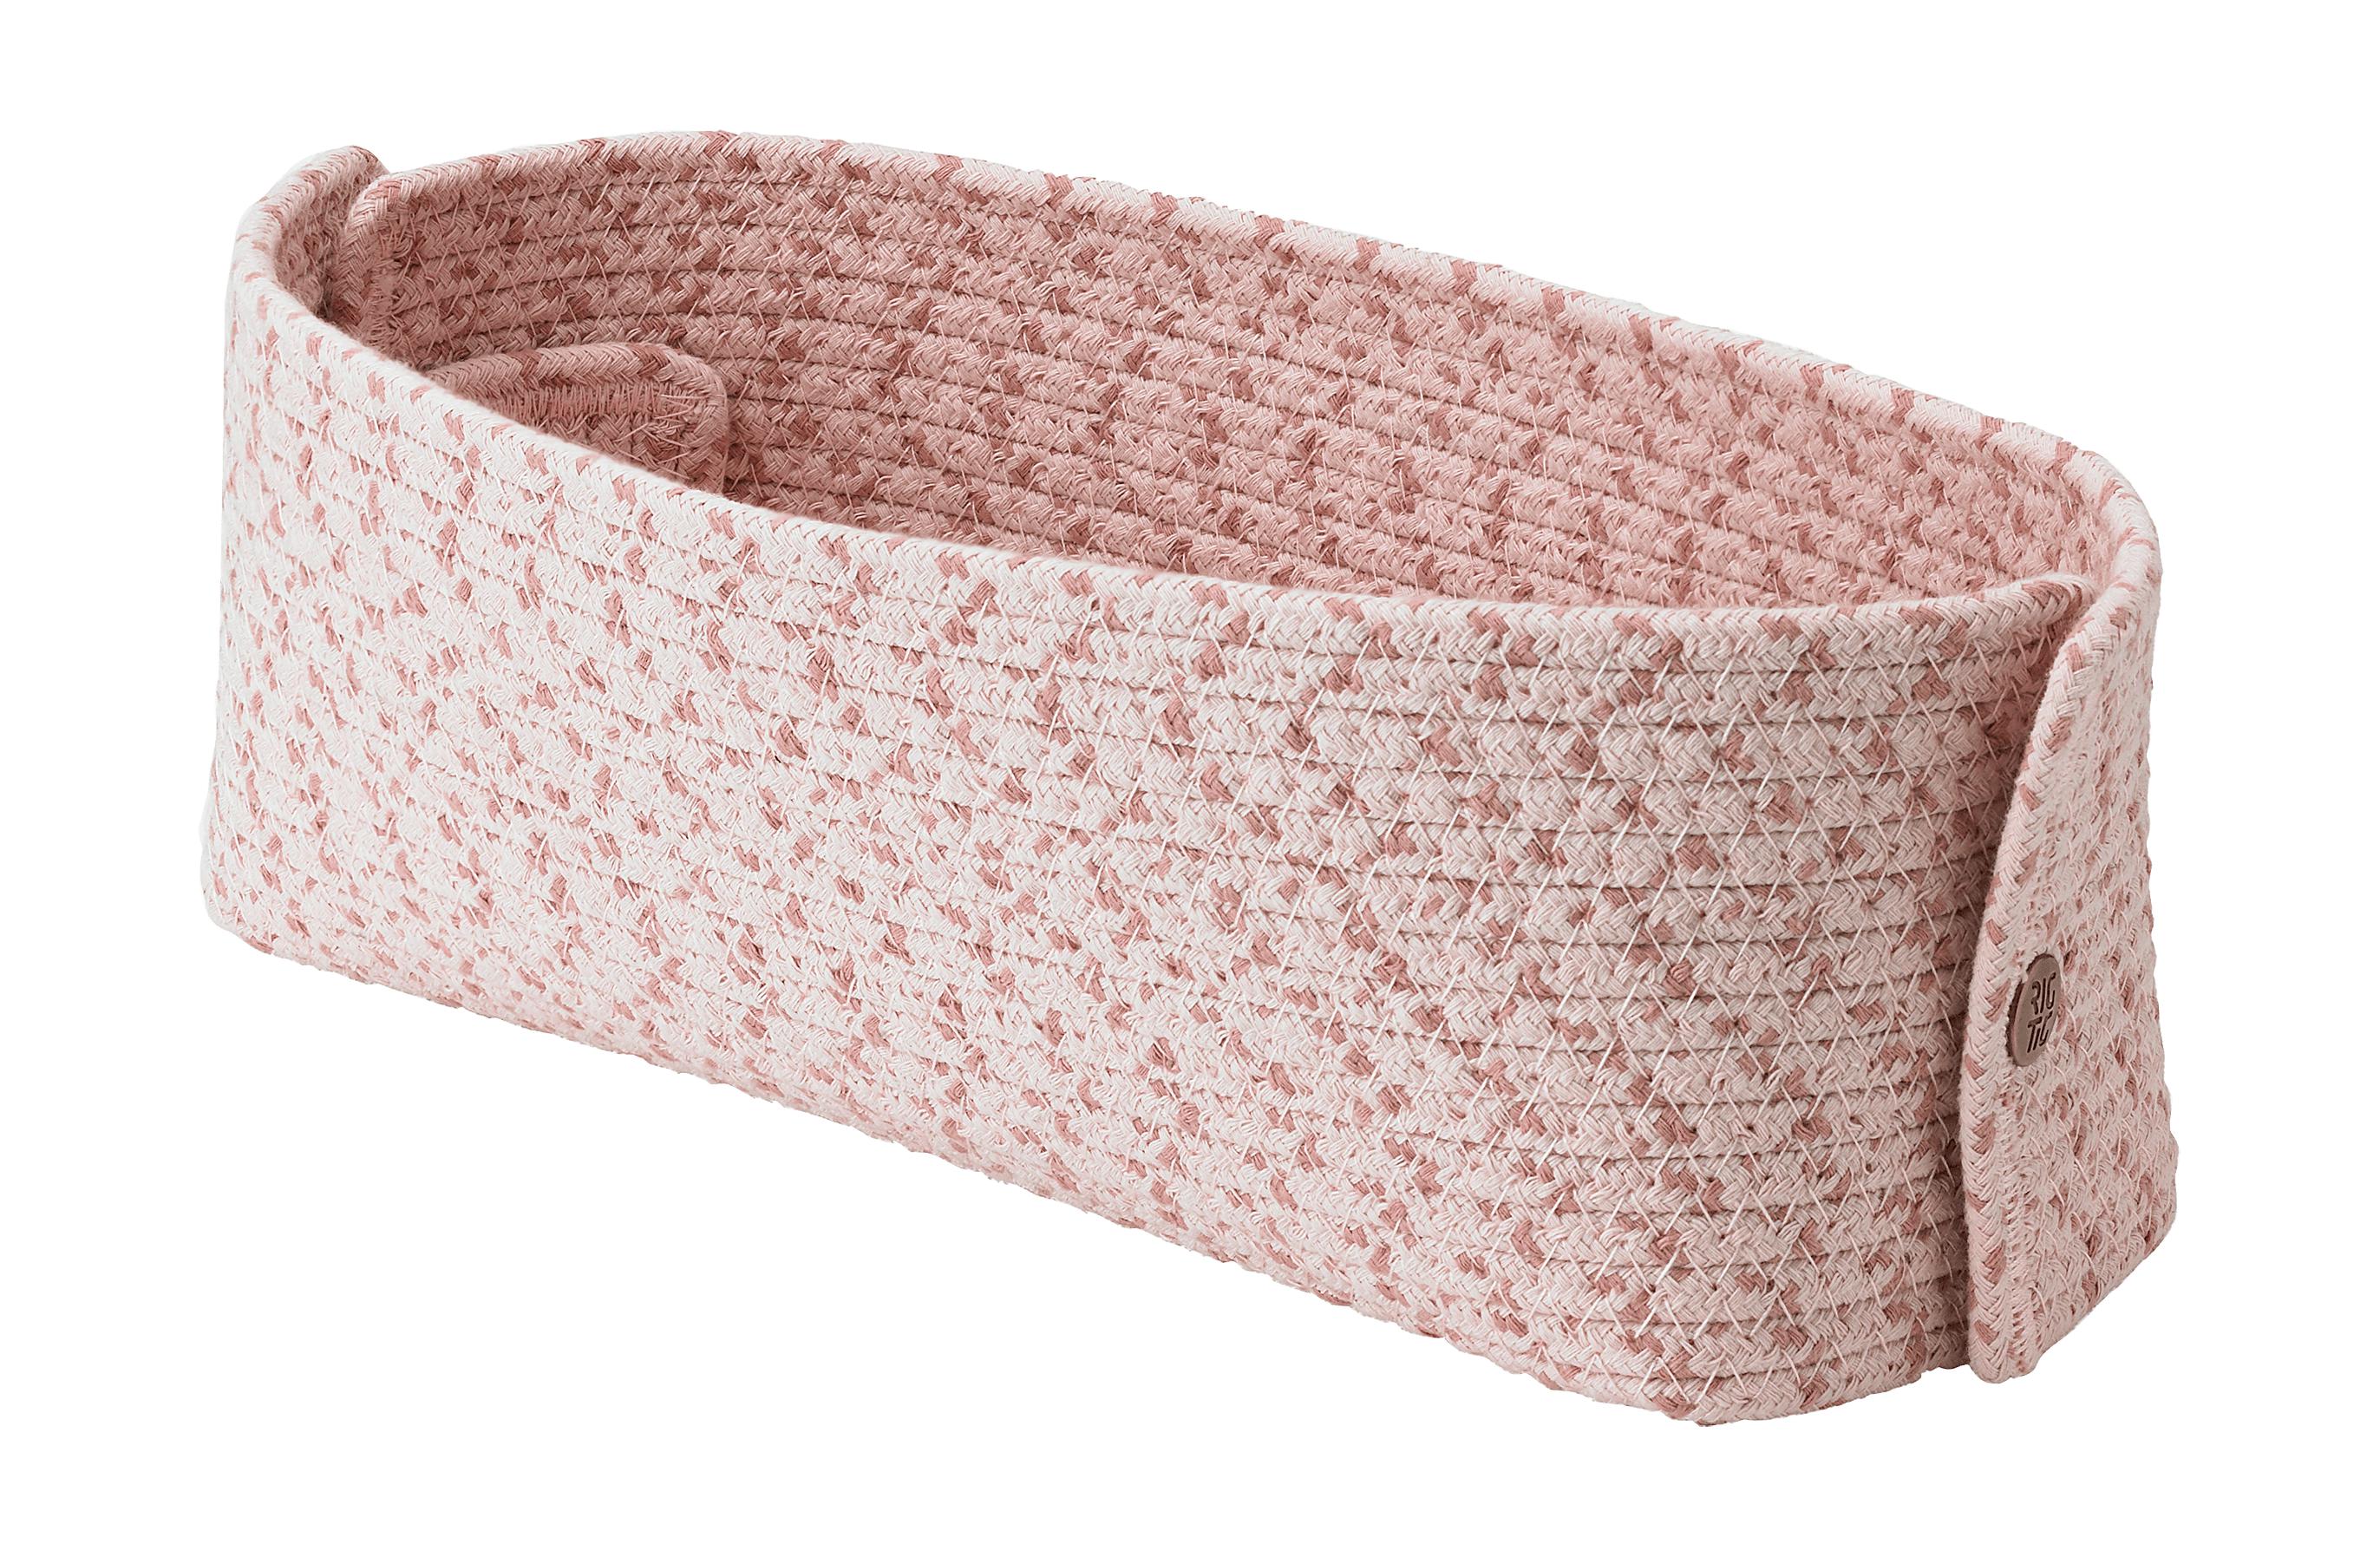 Rig Tig Knit It Bread Basket, Pink